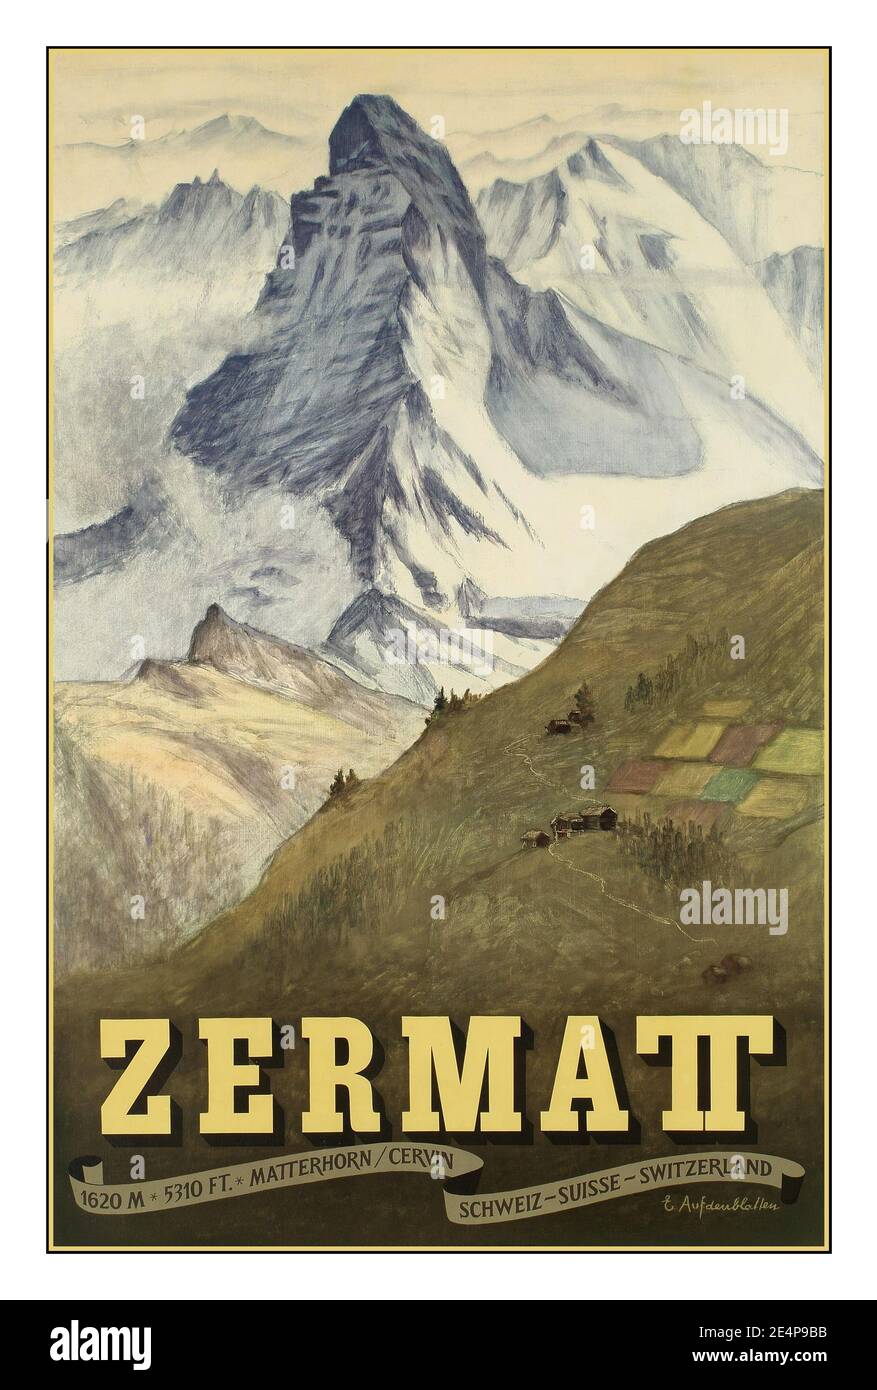 ZERMATT MATTERHORN Vintage 1950's Travel Poster di Emil Aufdenblatten Zermatt Mountain Region Lithograph poster stampato da H. Vantobel, Felgmellen Imprime en Suisse 1956 Foto Stock